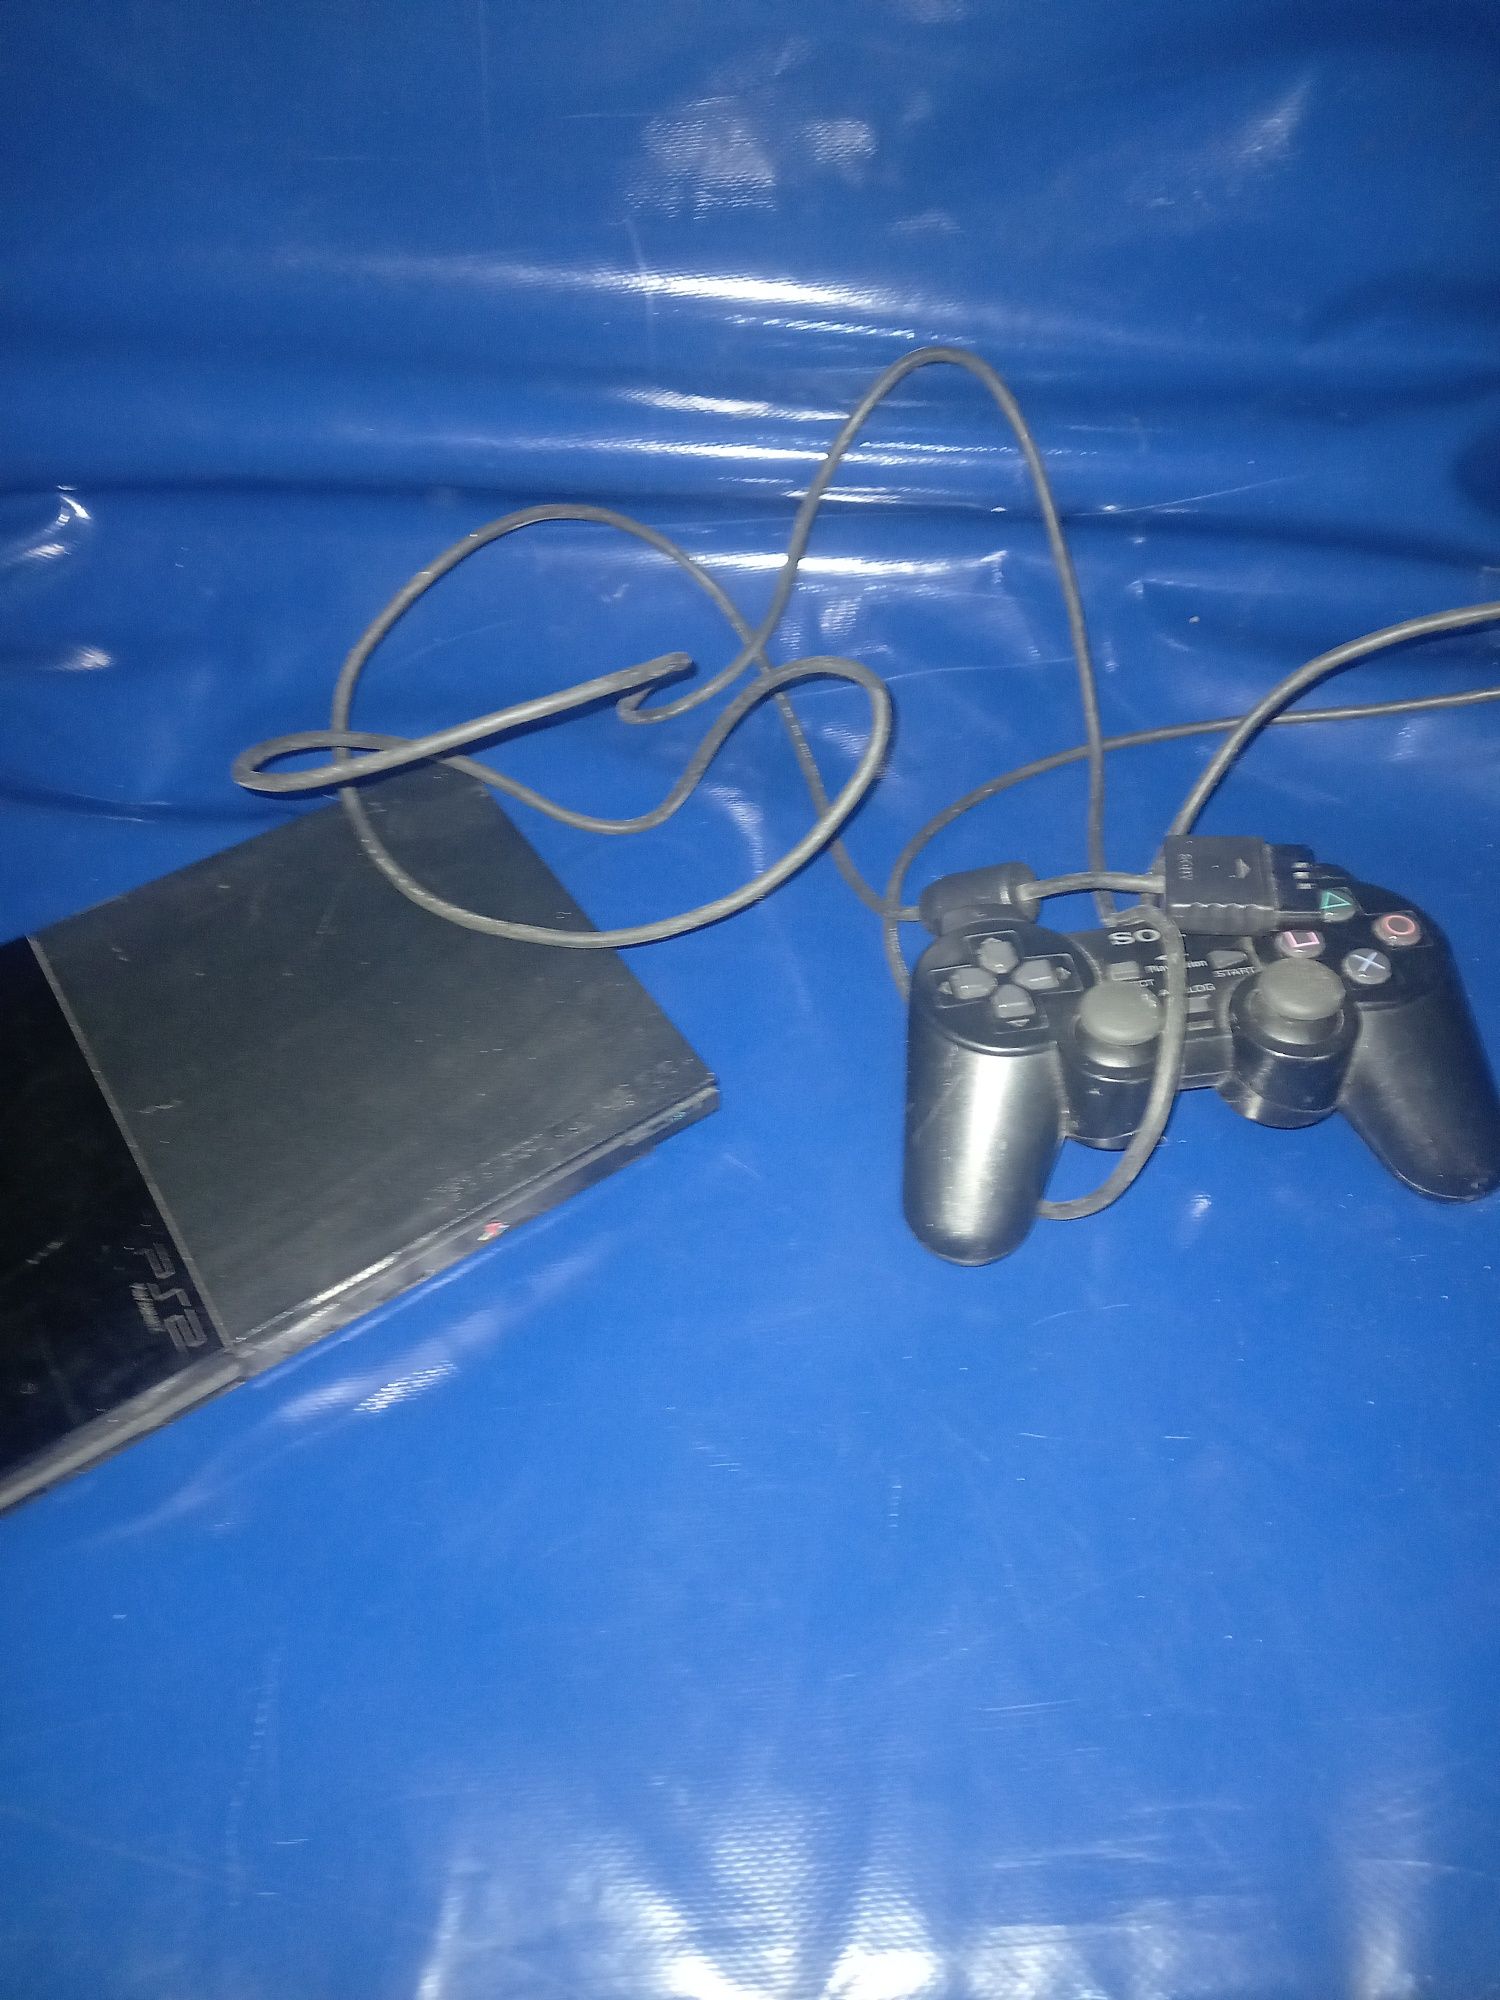 Sony playstation 2 slim